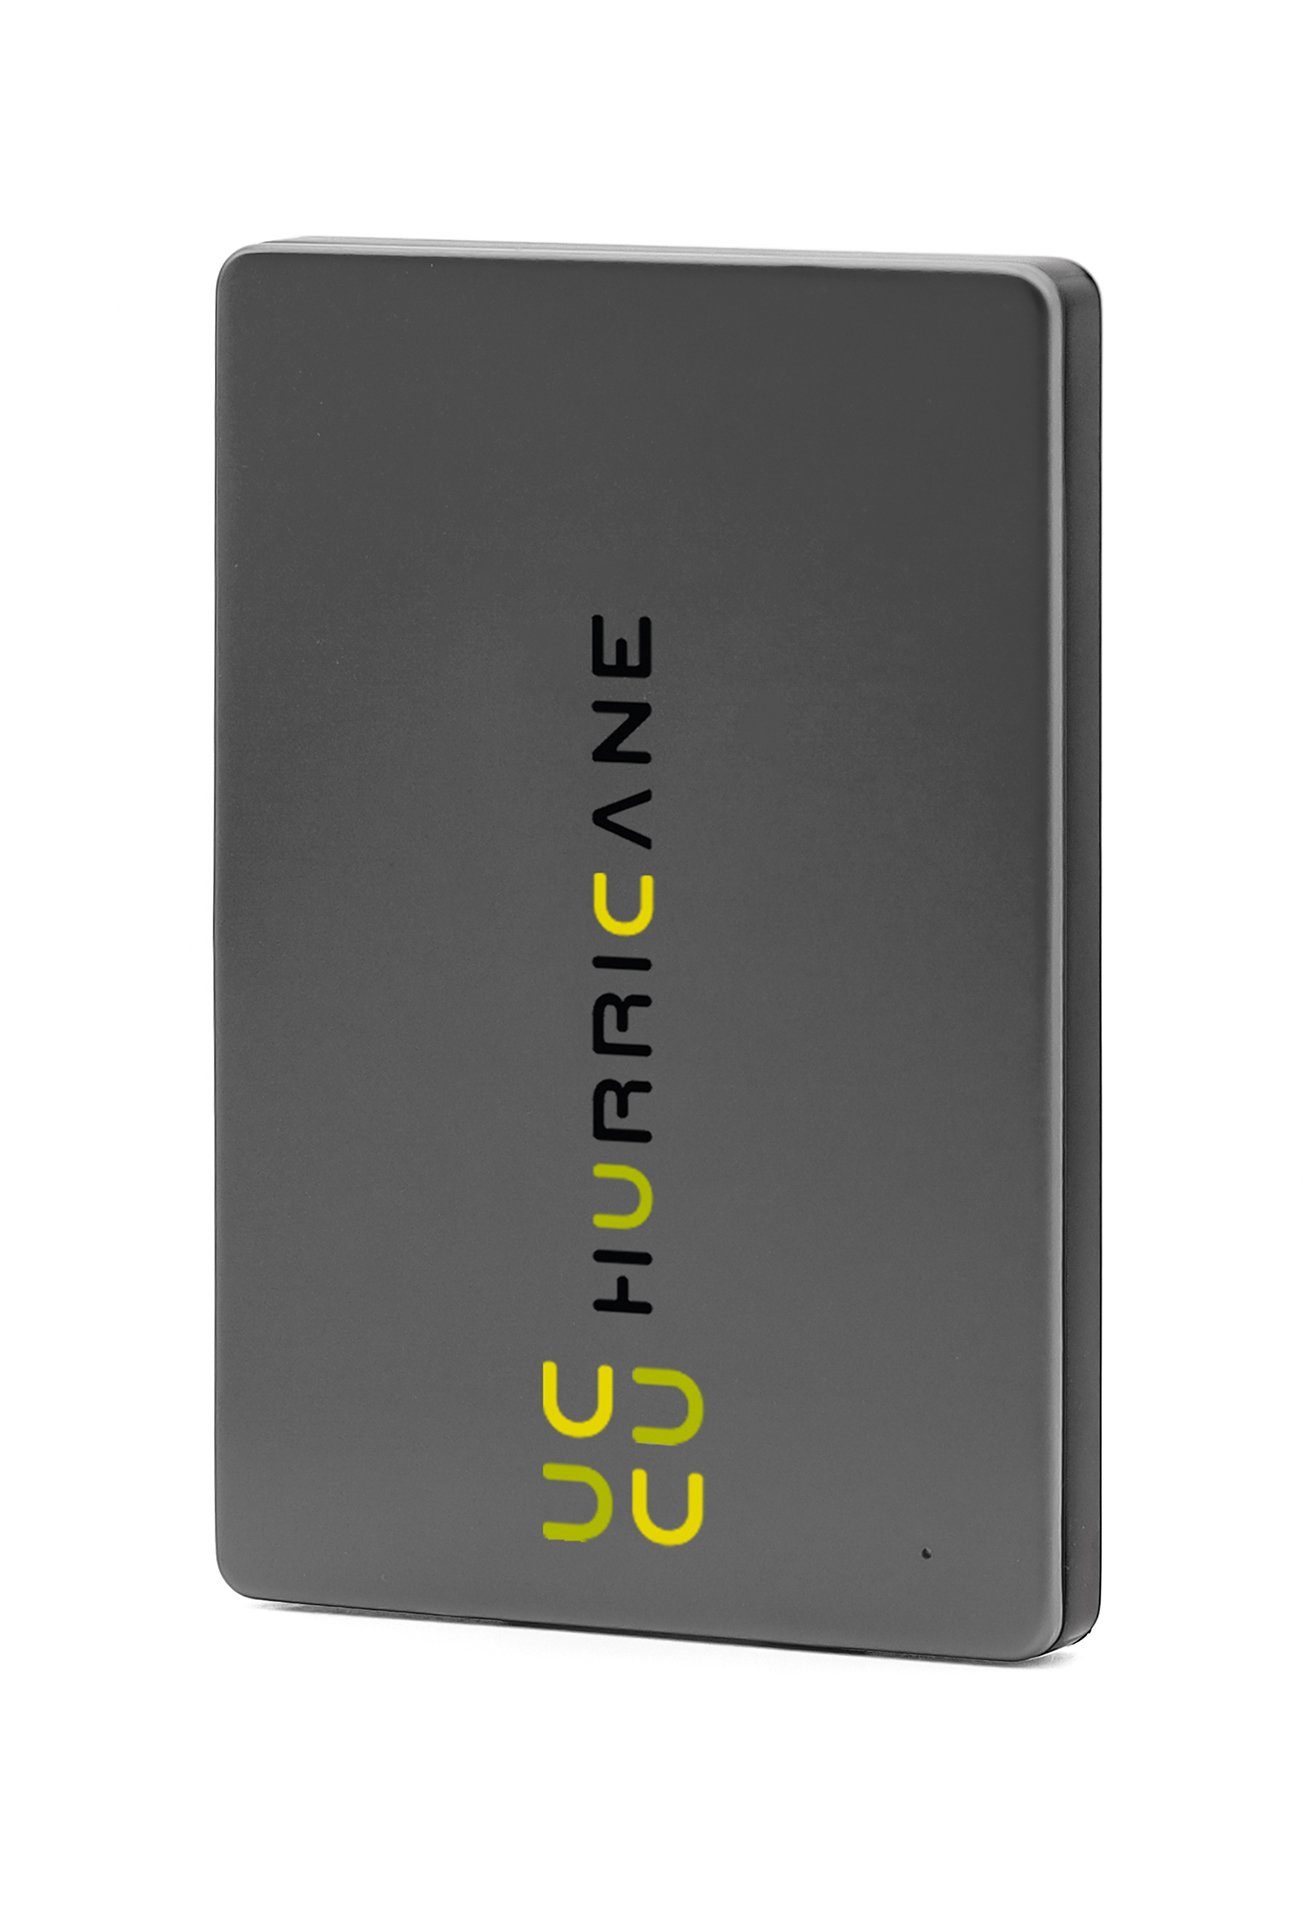 HURRICANE MD25U3 Tragbare Externe Festplatte 1TB 2,5" USB 3.0 externe HDD-Festplatte (1TB) 2,5", für PC Laptop TV PS4 PS5 Xbox, kompatibel mit Windows Mac und Linux